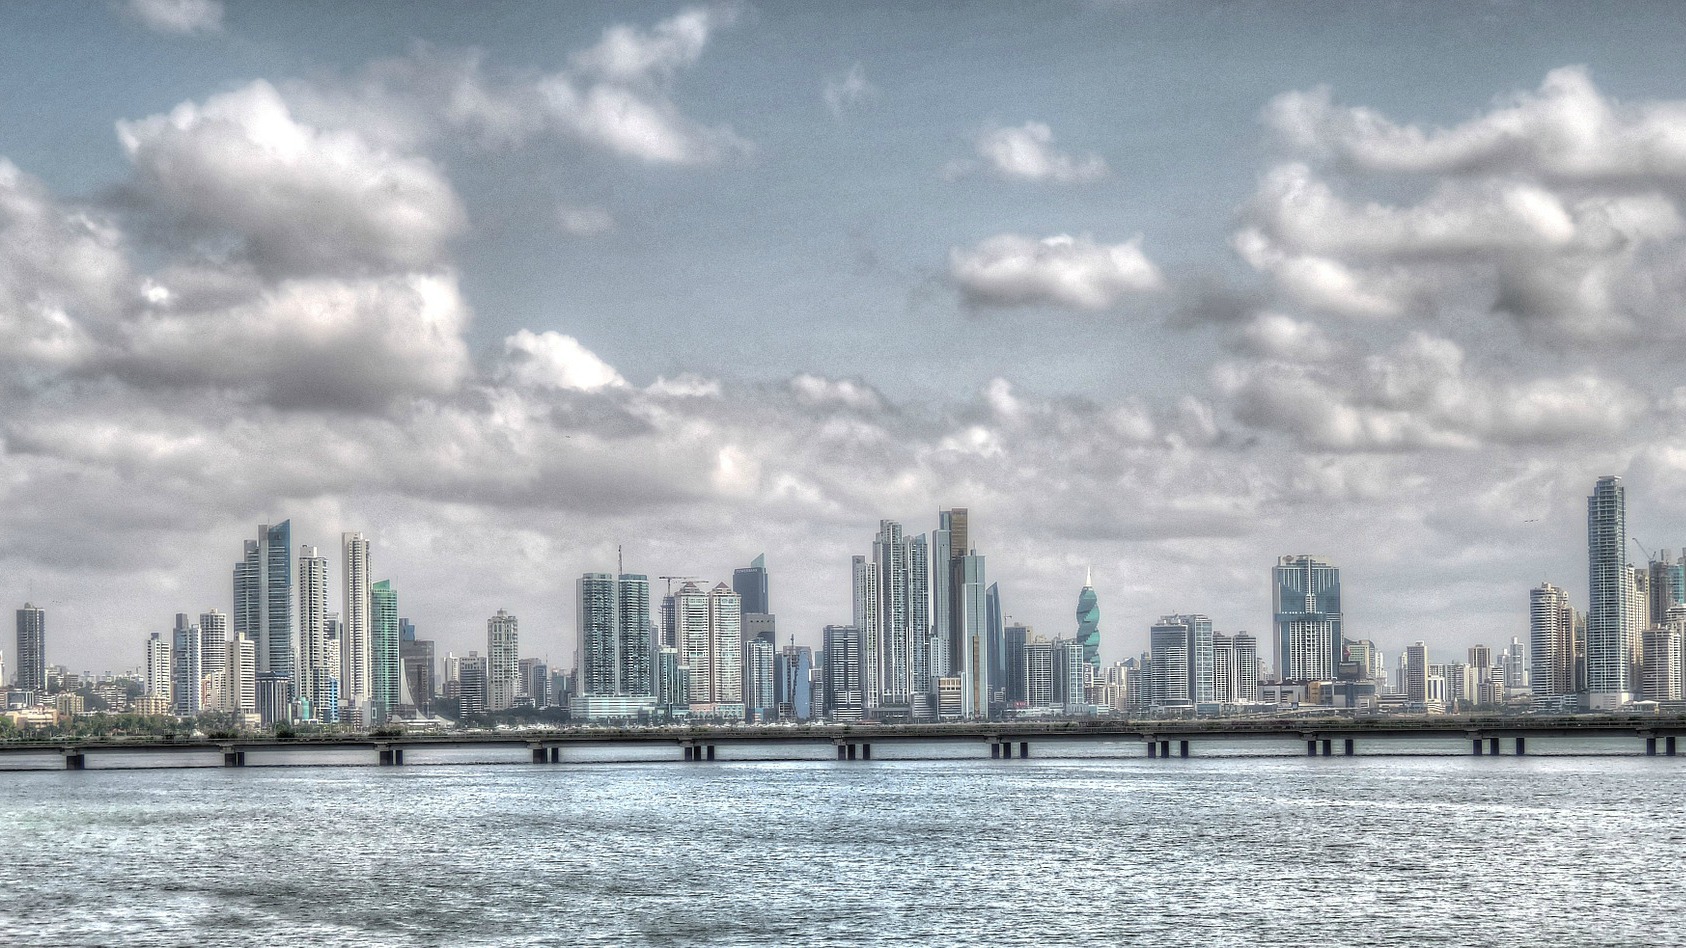 Panama City accueillera les prochaines JMJ (Photo:Pixabay.com)